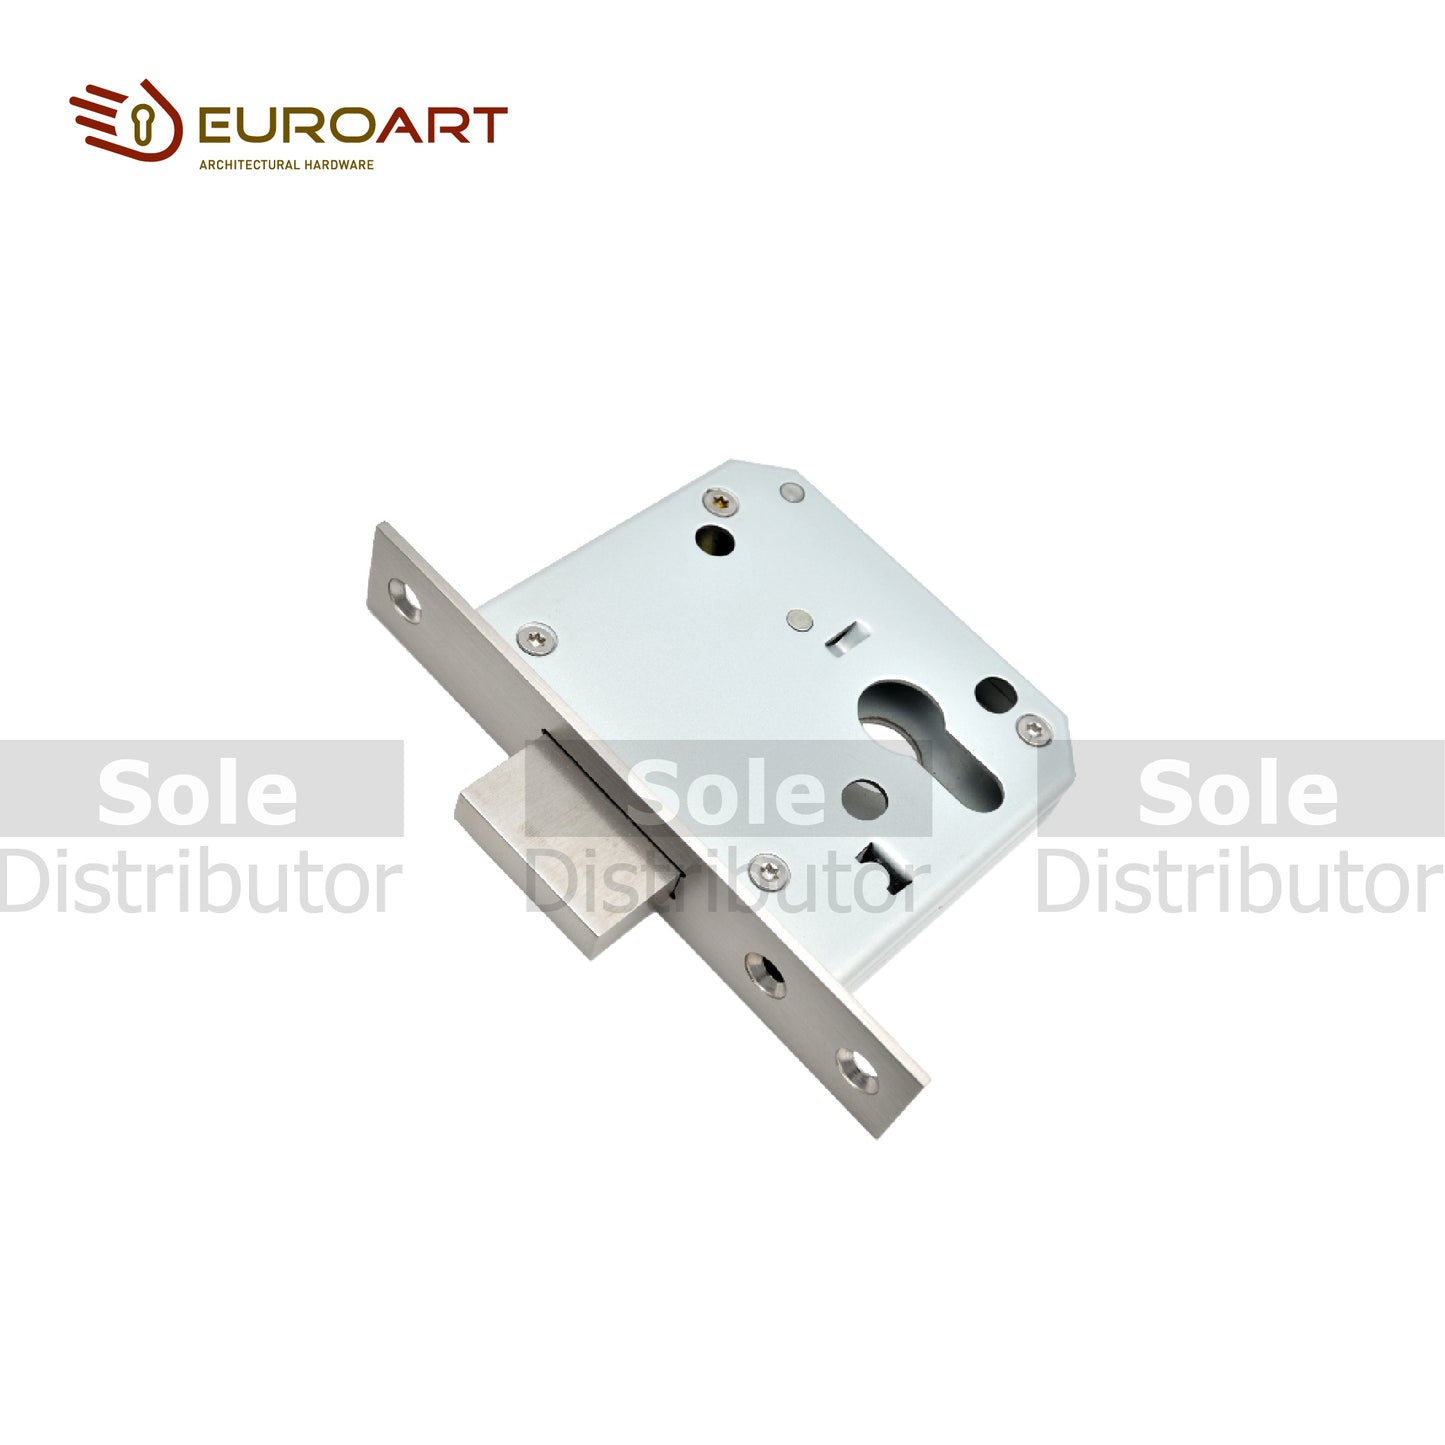 Euroart DIN Flat Dead lock Body,55mm Backset, Finish Satin Stainless Steel - FD0055EP/SSS